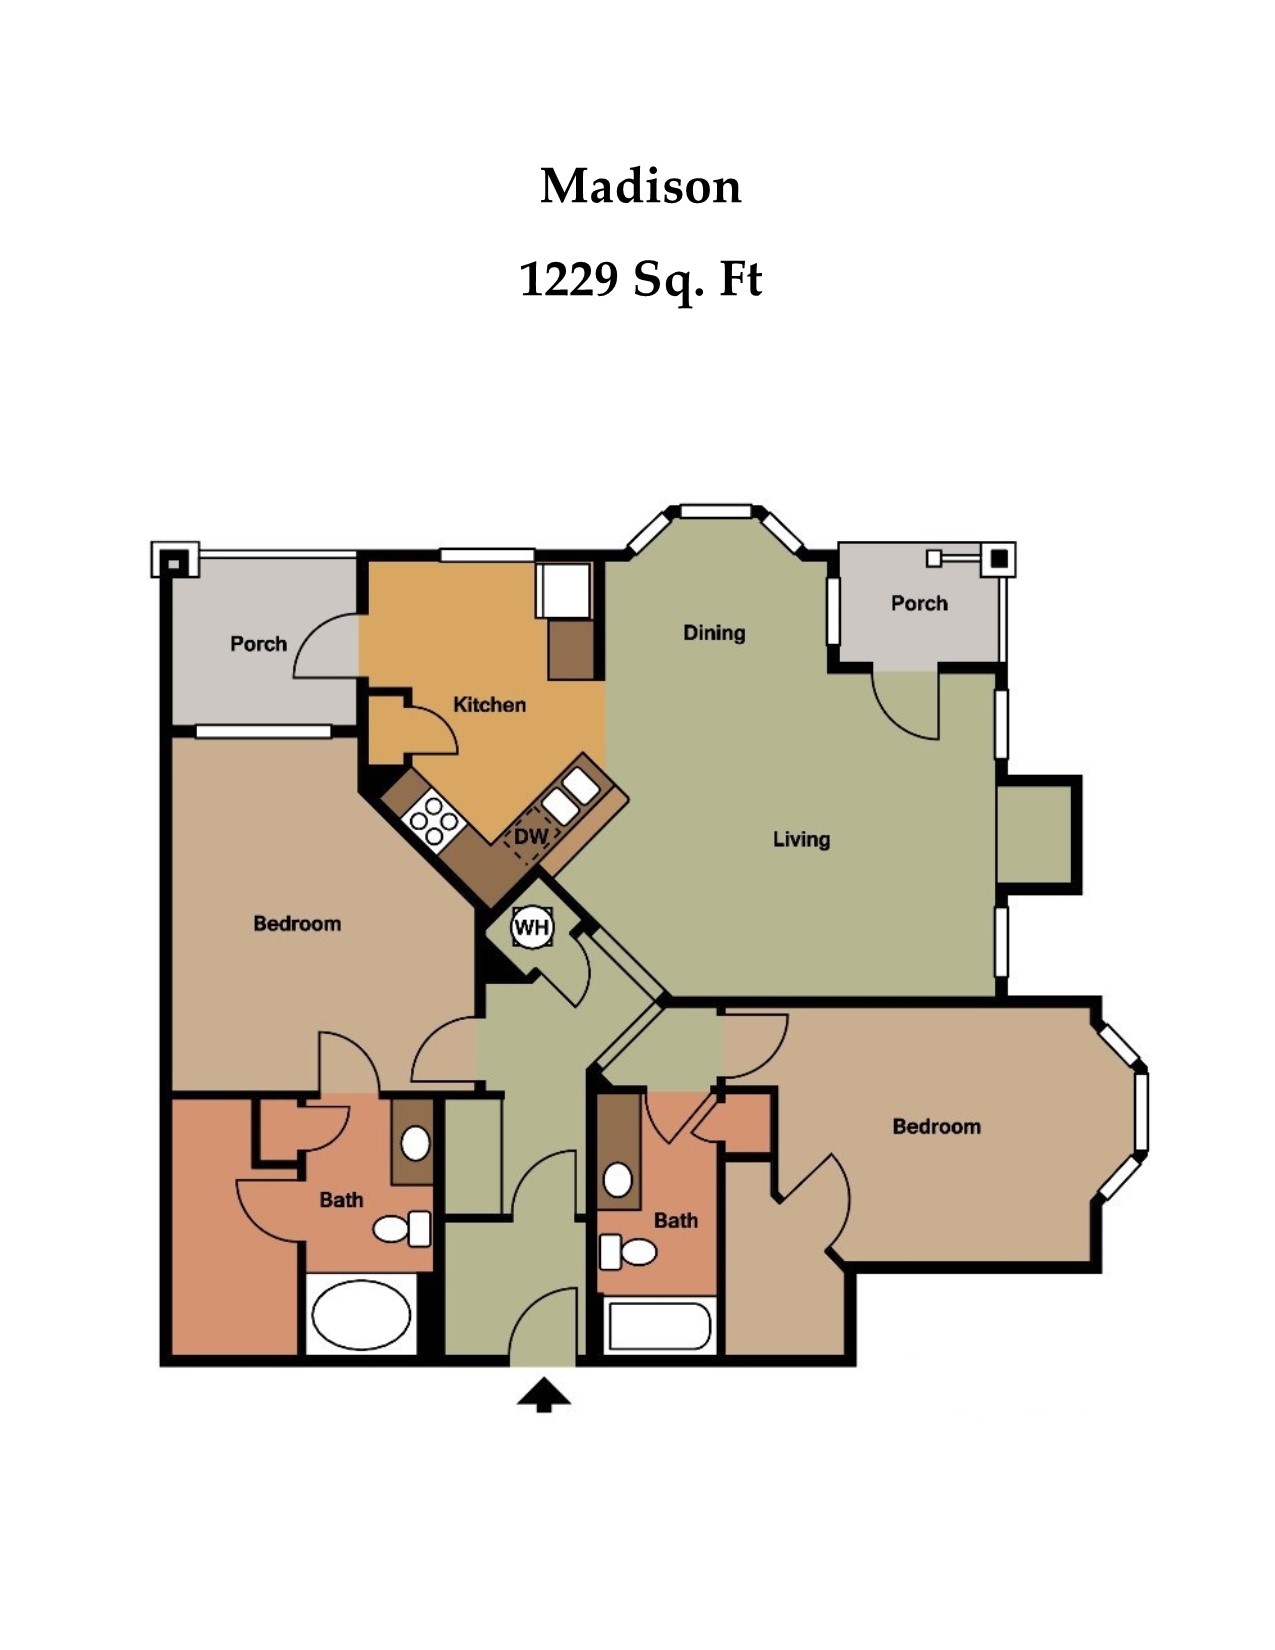 Floorplan - The Madison image